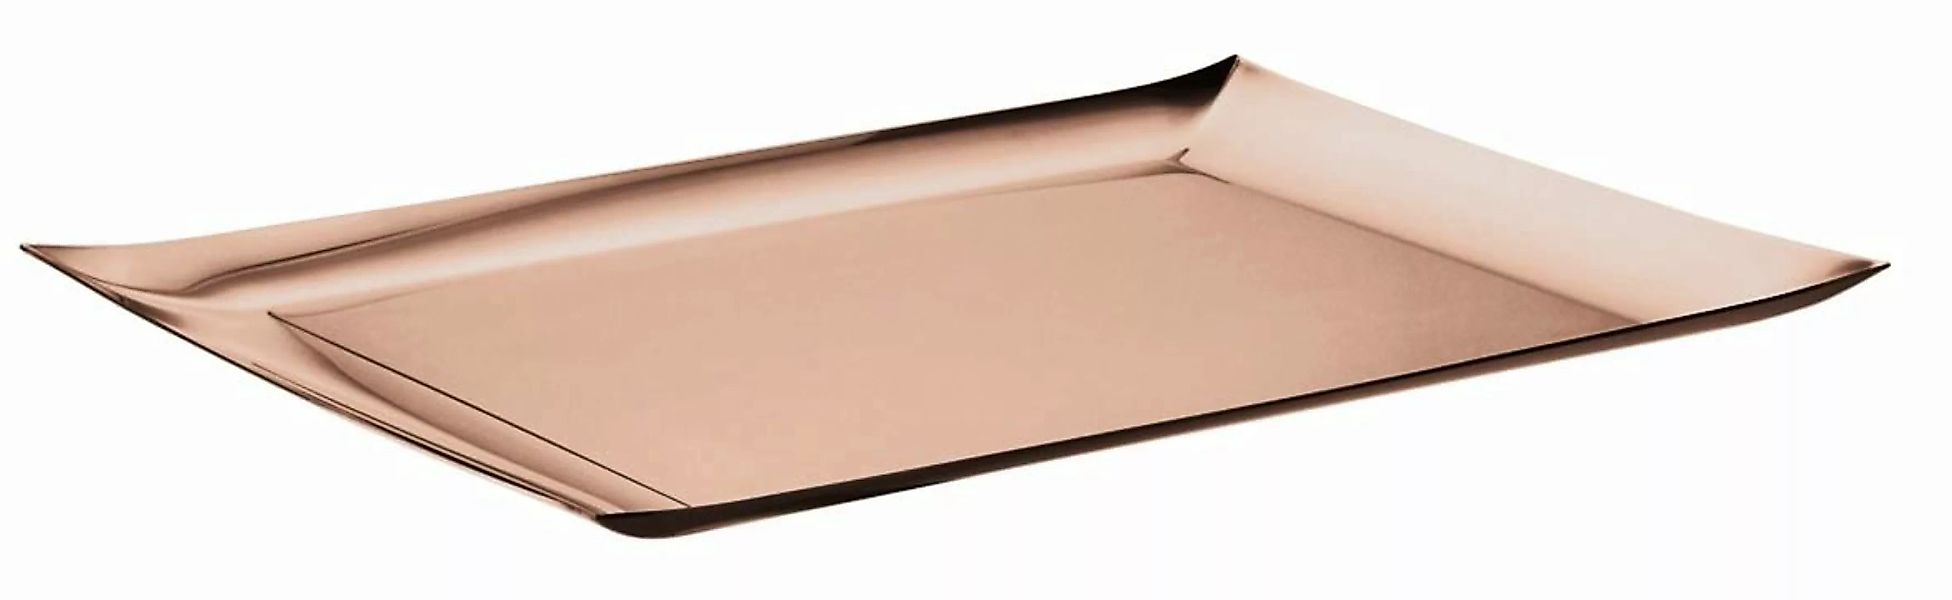 Sambonet Tabletts Linea Q Edelstahl/PVD Rum Tablett 43 x 28 cm (braun) günstig online kaufen